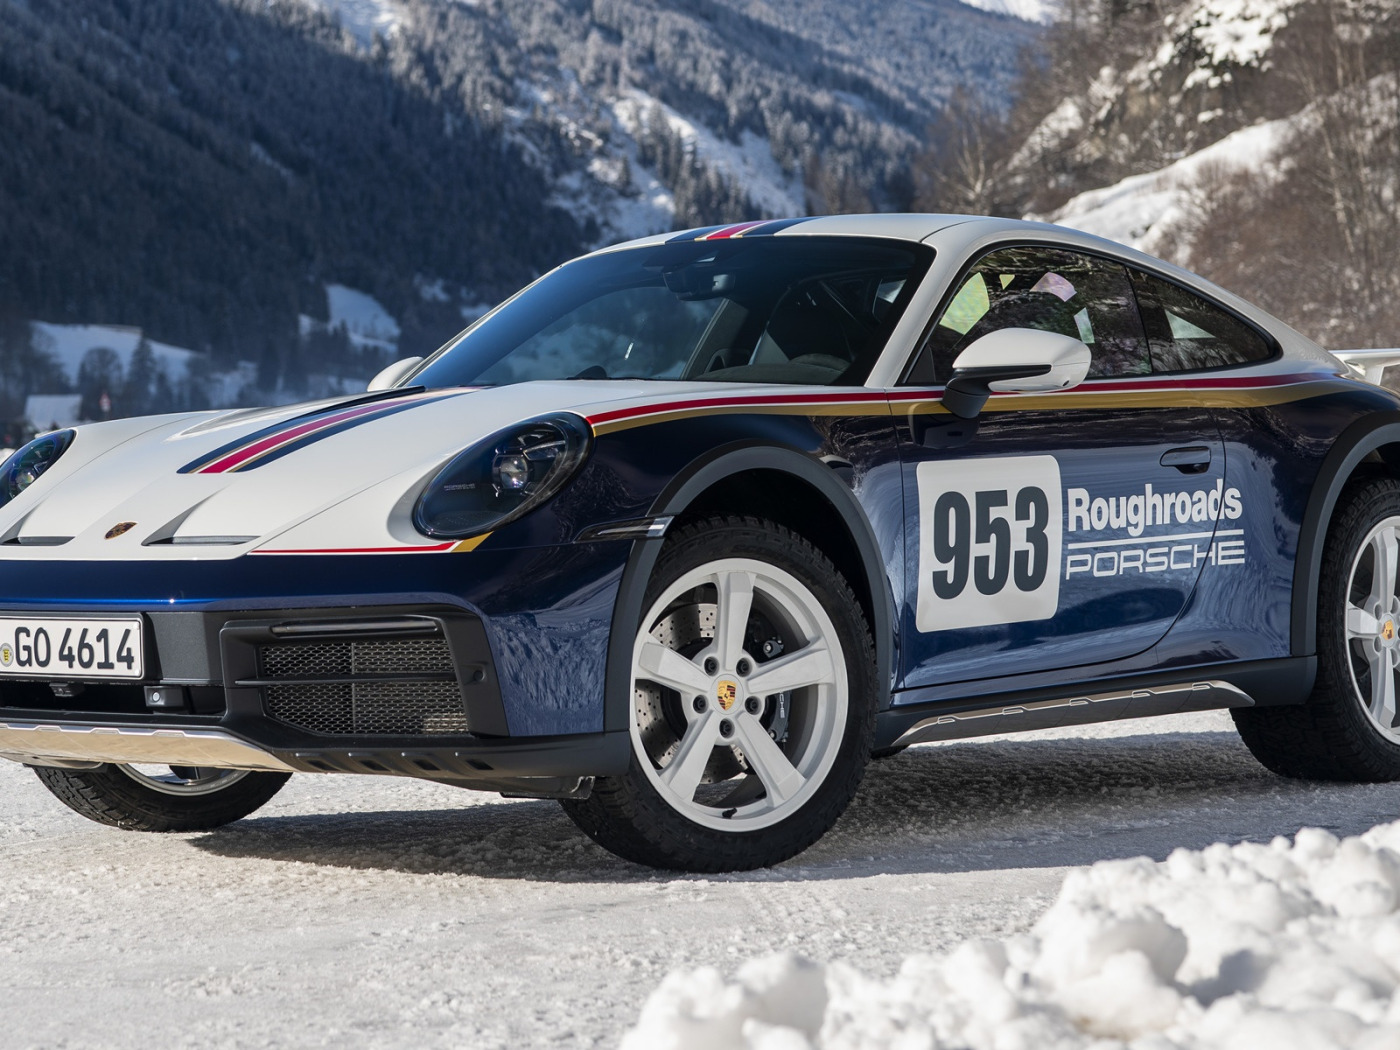 Download wallpaper snow, mountains, Porsche, Porsche rally, Dakar, Dakar, exterior, section porsche in resolution 1400x1050